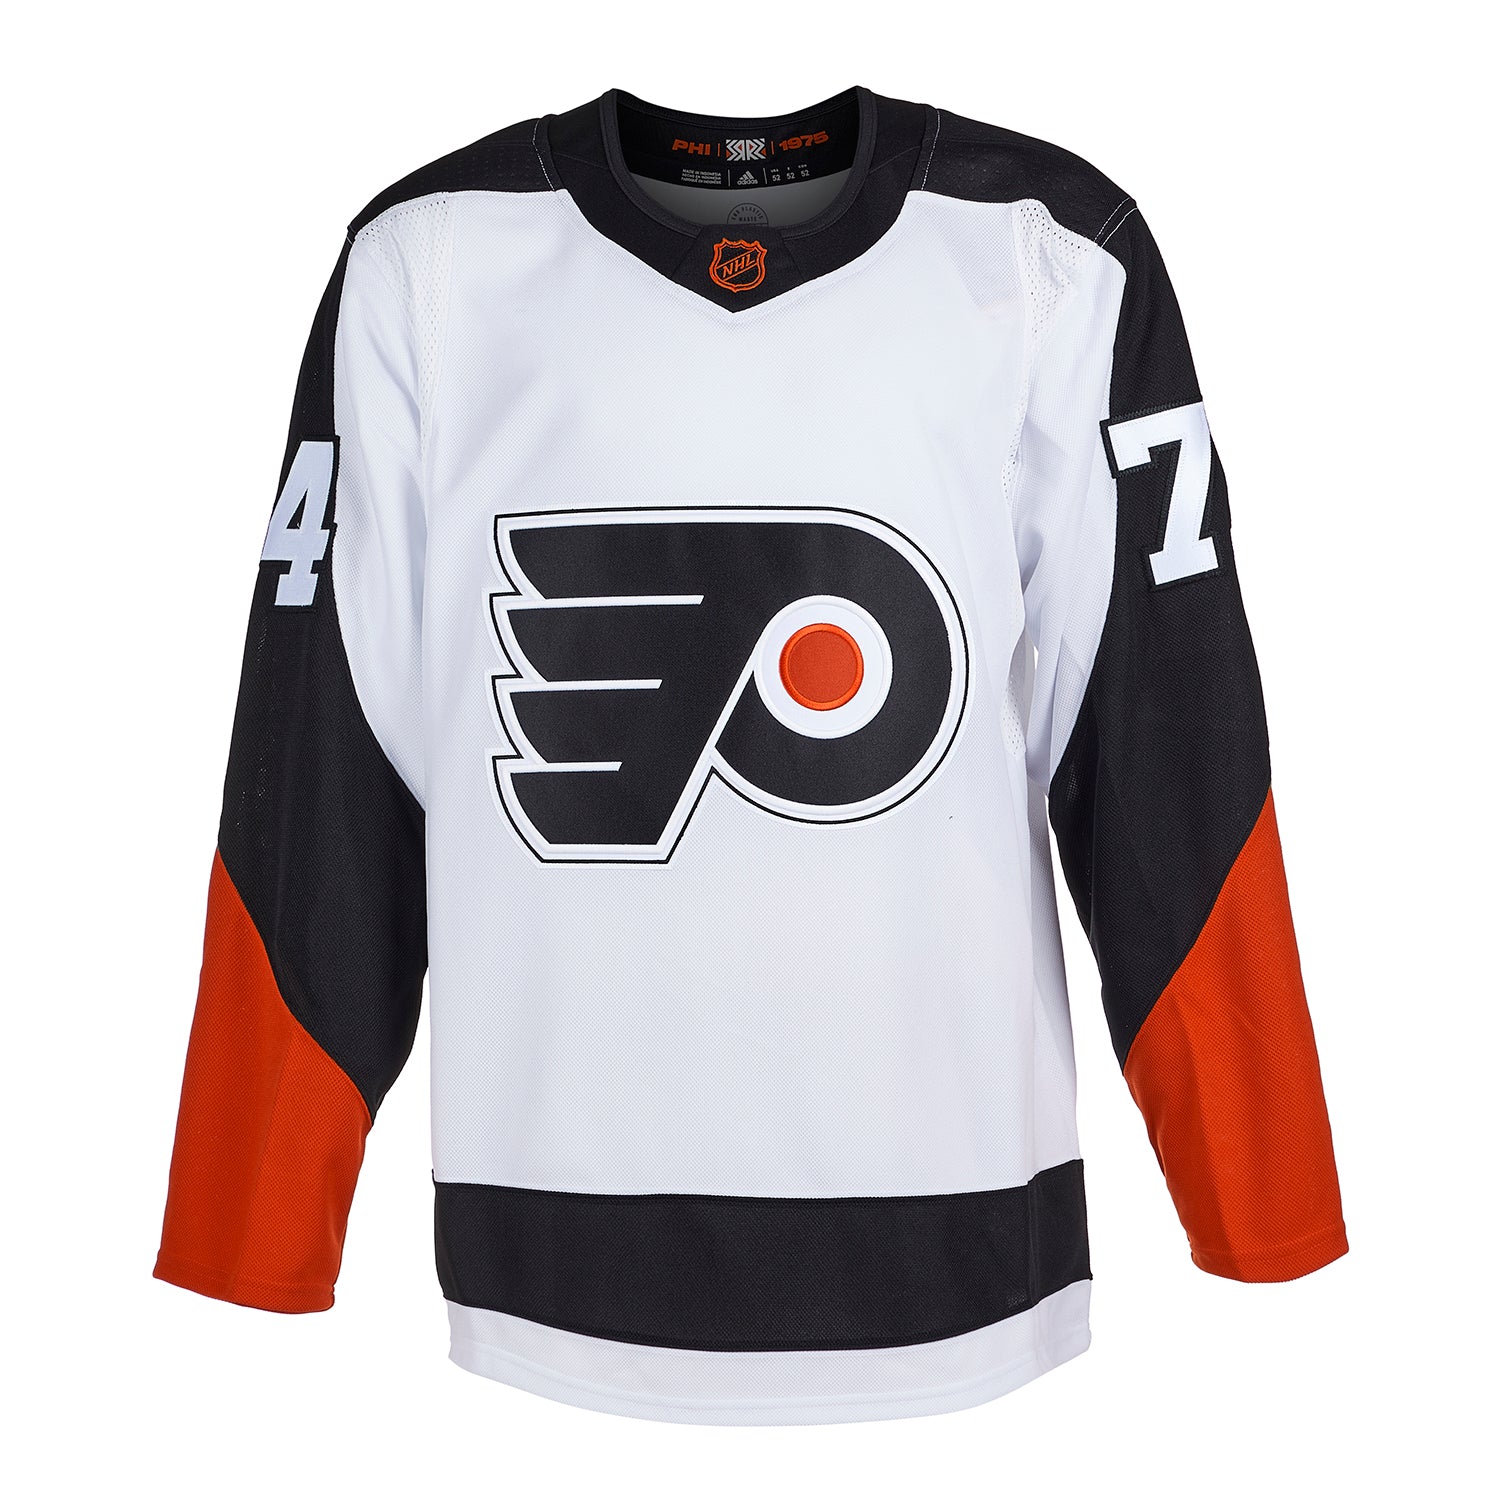 Owen Tippett Signed Philadelphia Flyers Reverse Retro 2.0 Adidas